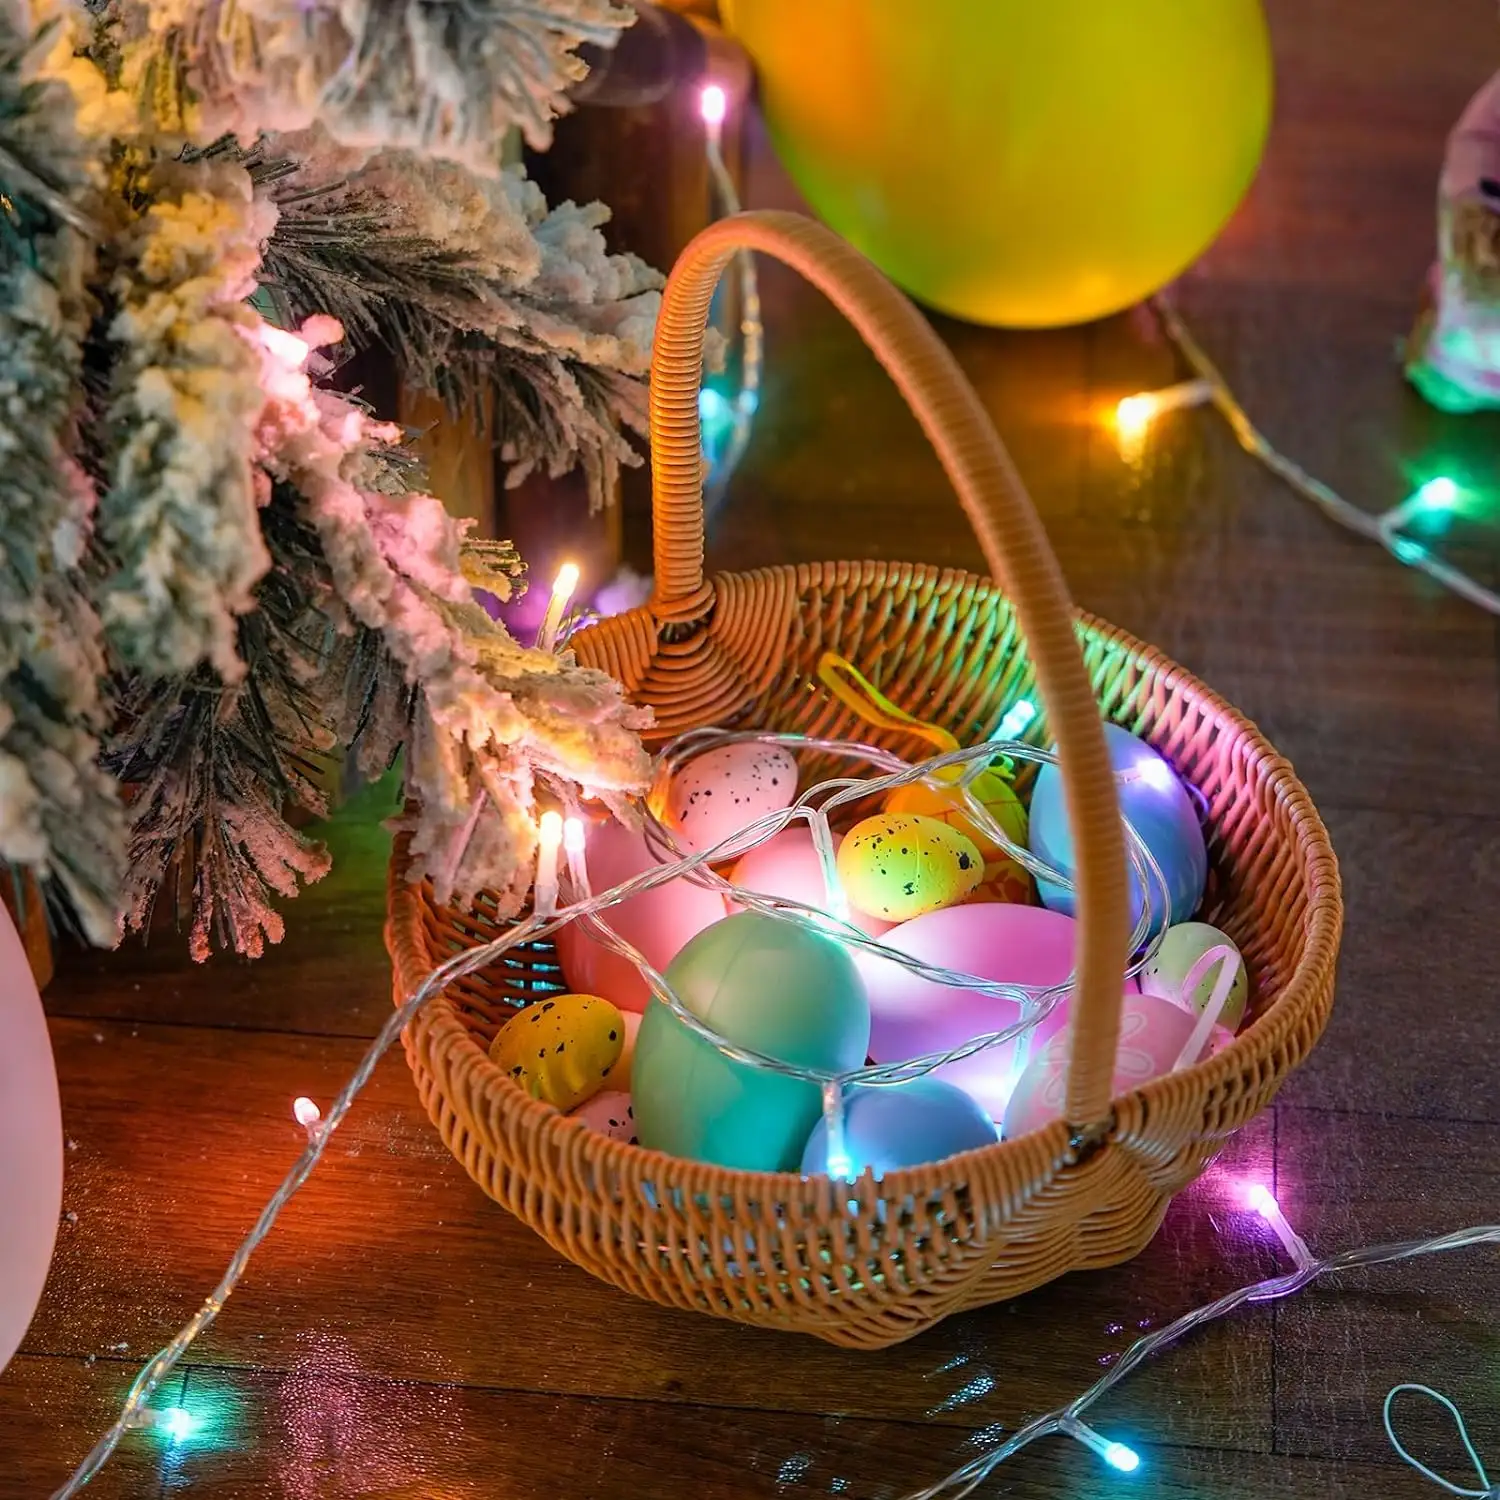 Flash LED Firecracker Lights Led Fairy Christmas string light Christmas Decoration Supplies for Outdoor decor